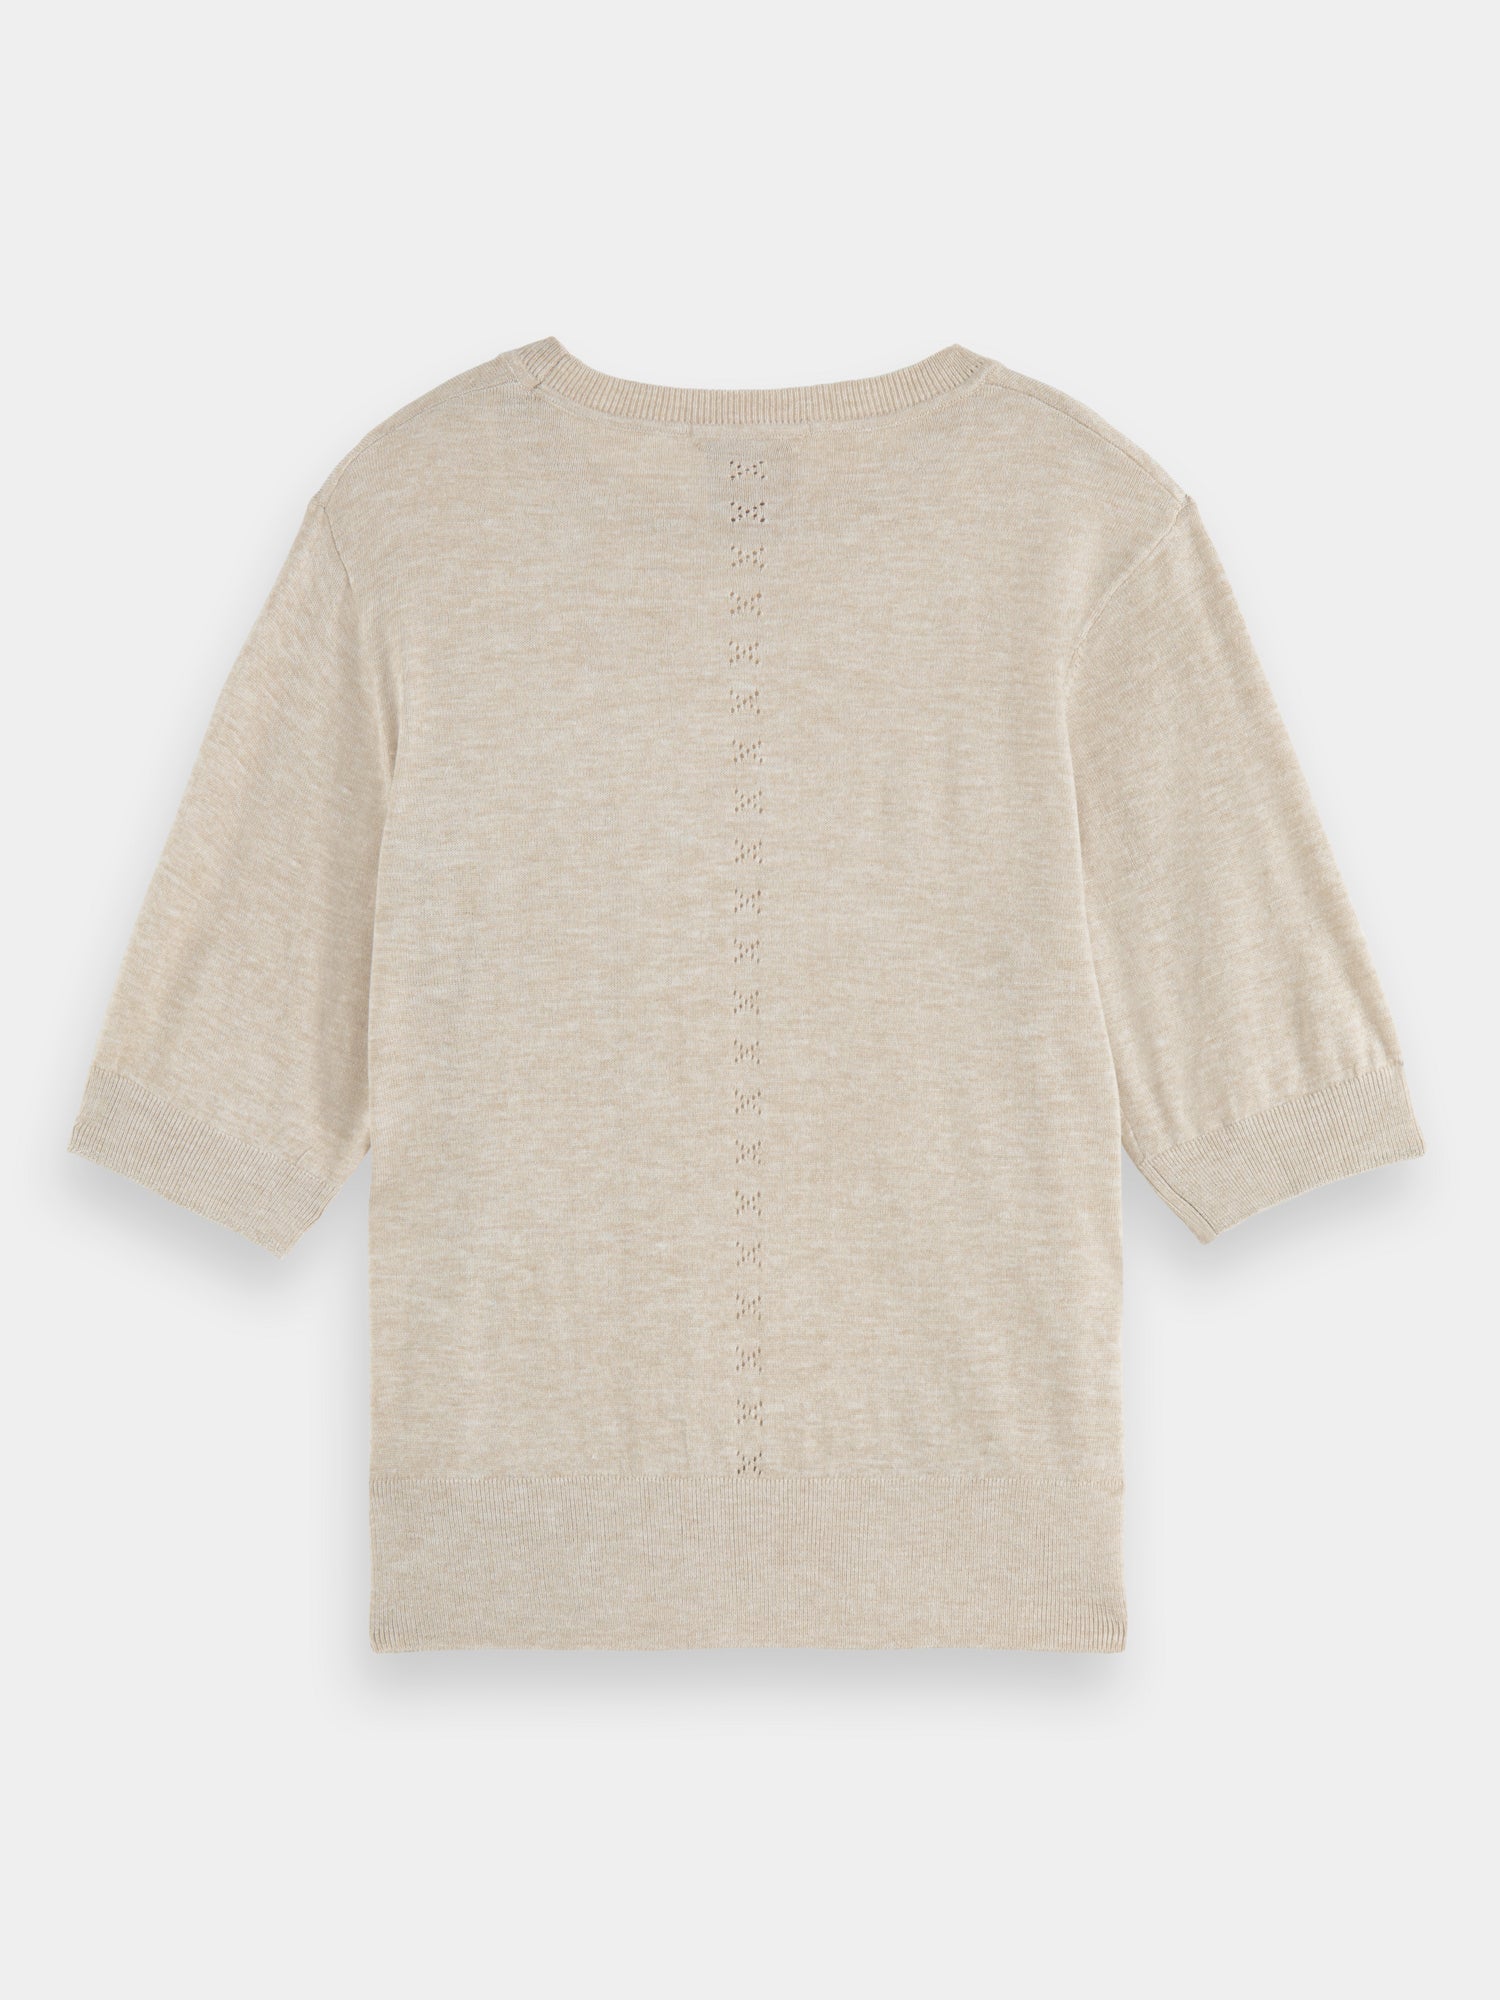 Short sleeved crewneck sweater - Oatmeal Melange